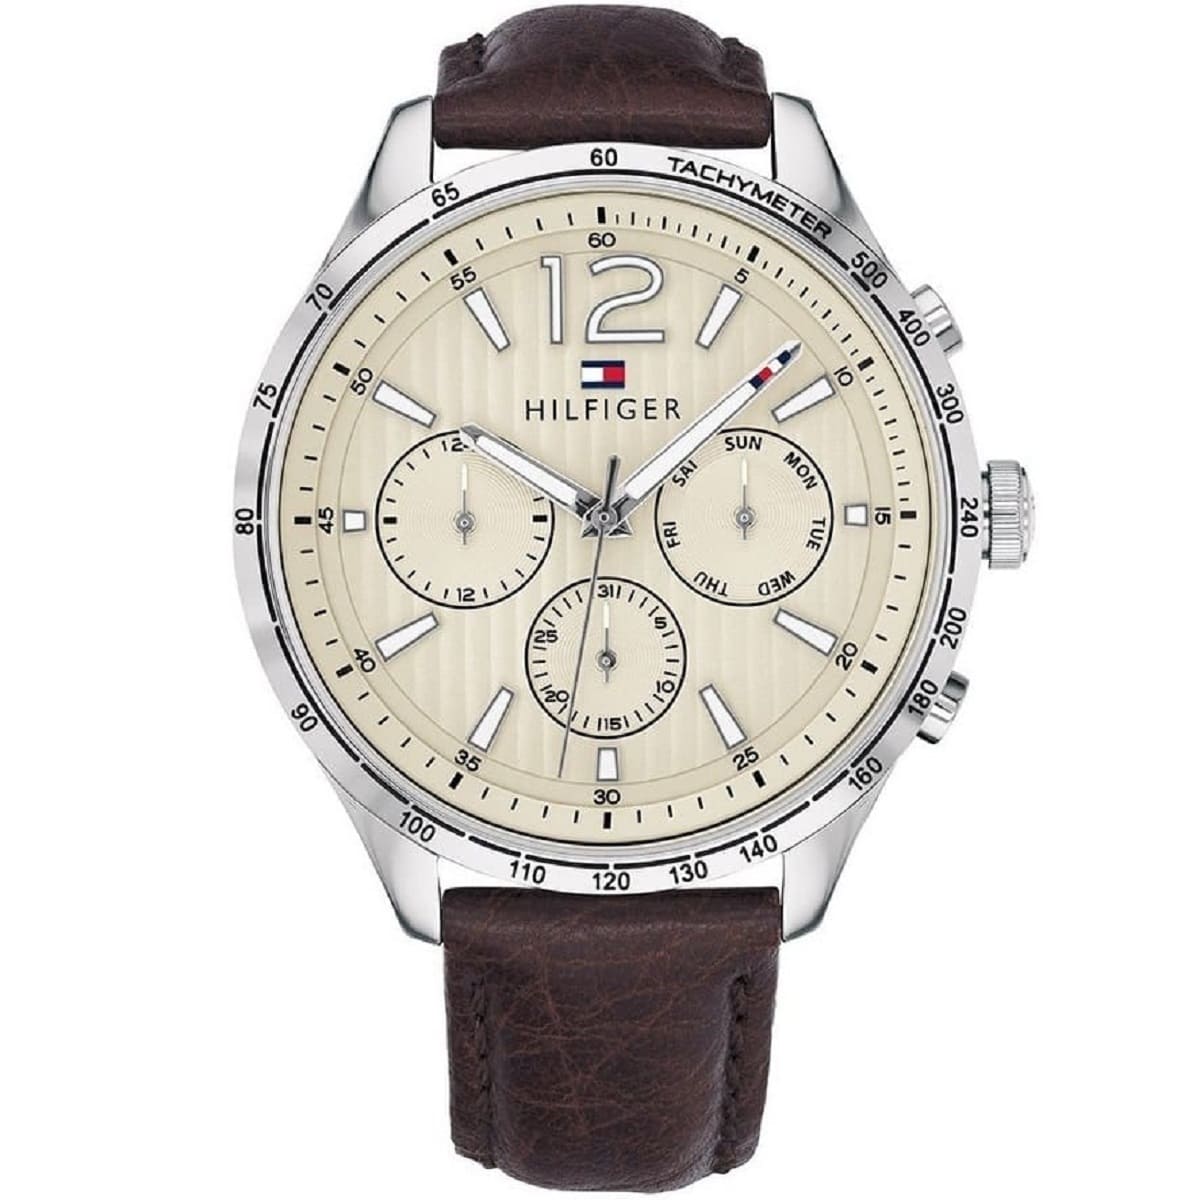 1791467-original-tommy-hilfiger-watch-brown-strap-genuine-leather-egypt